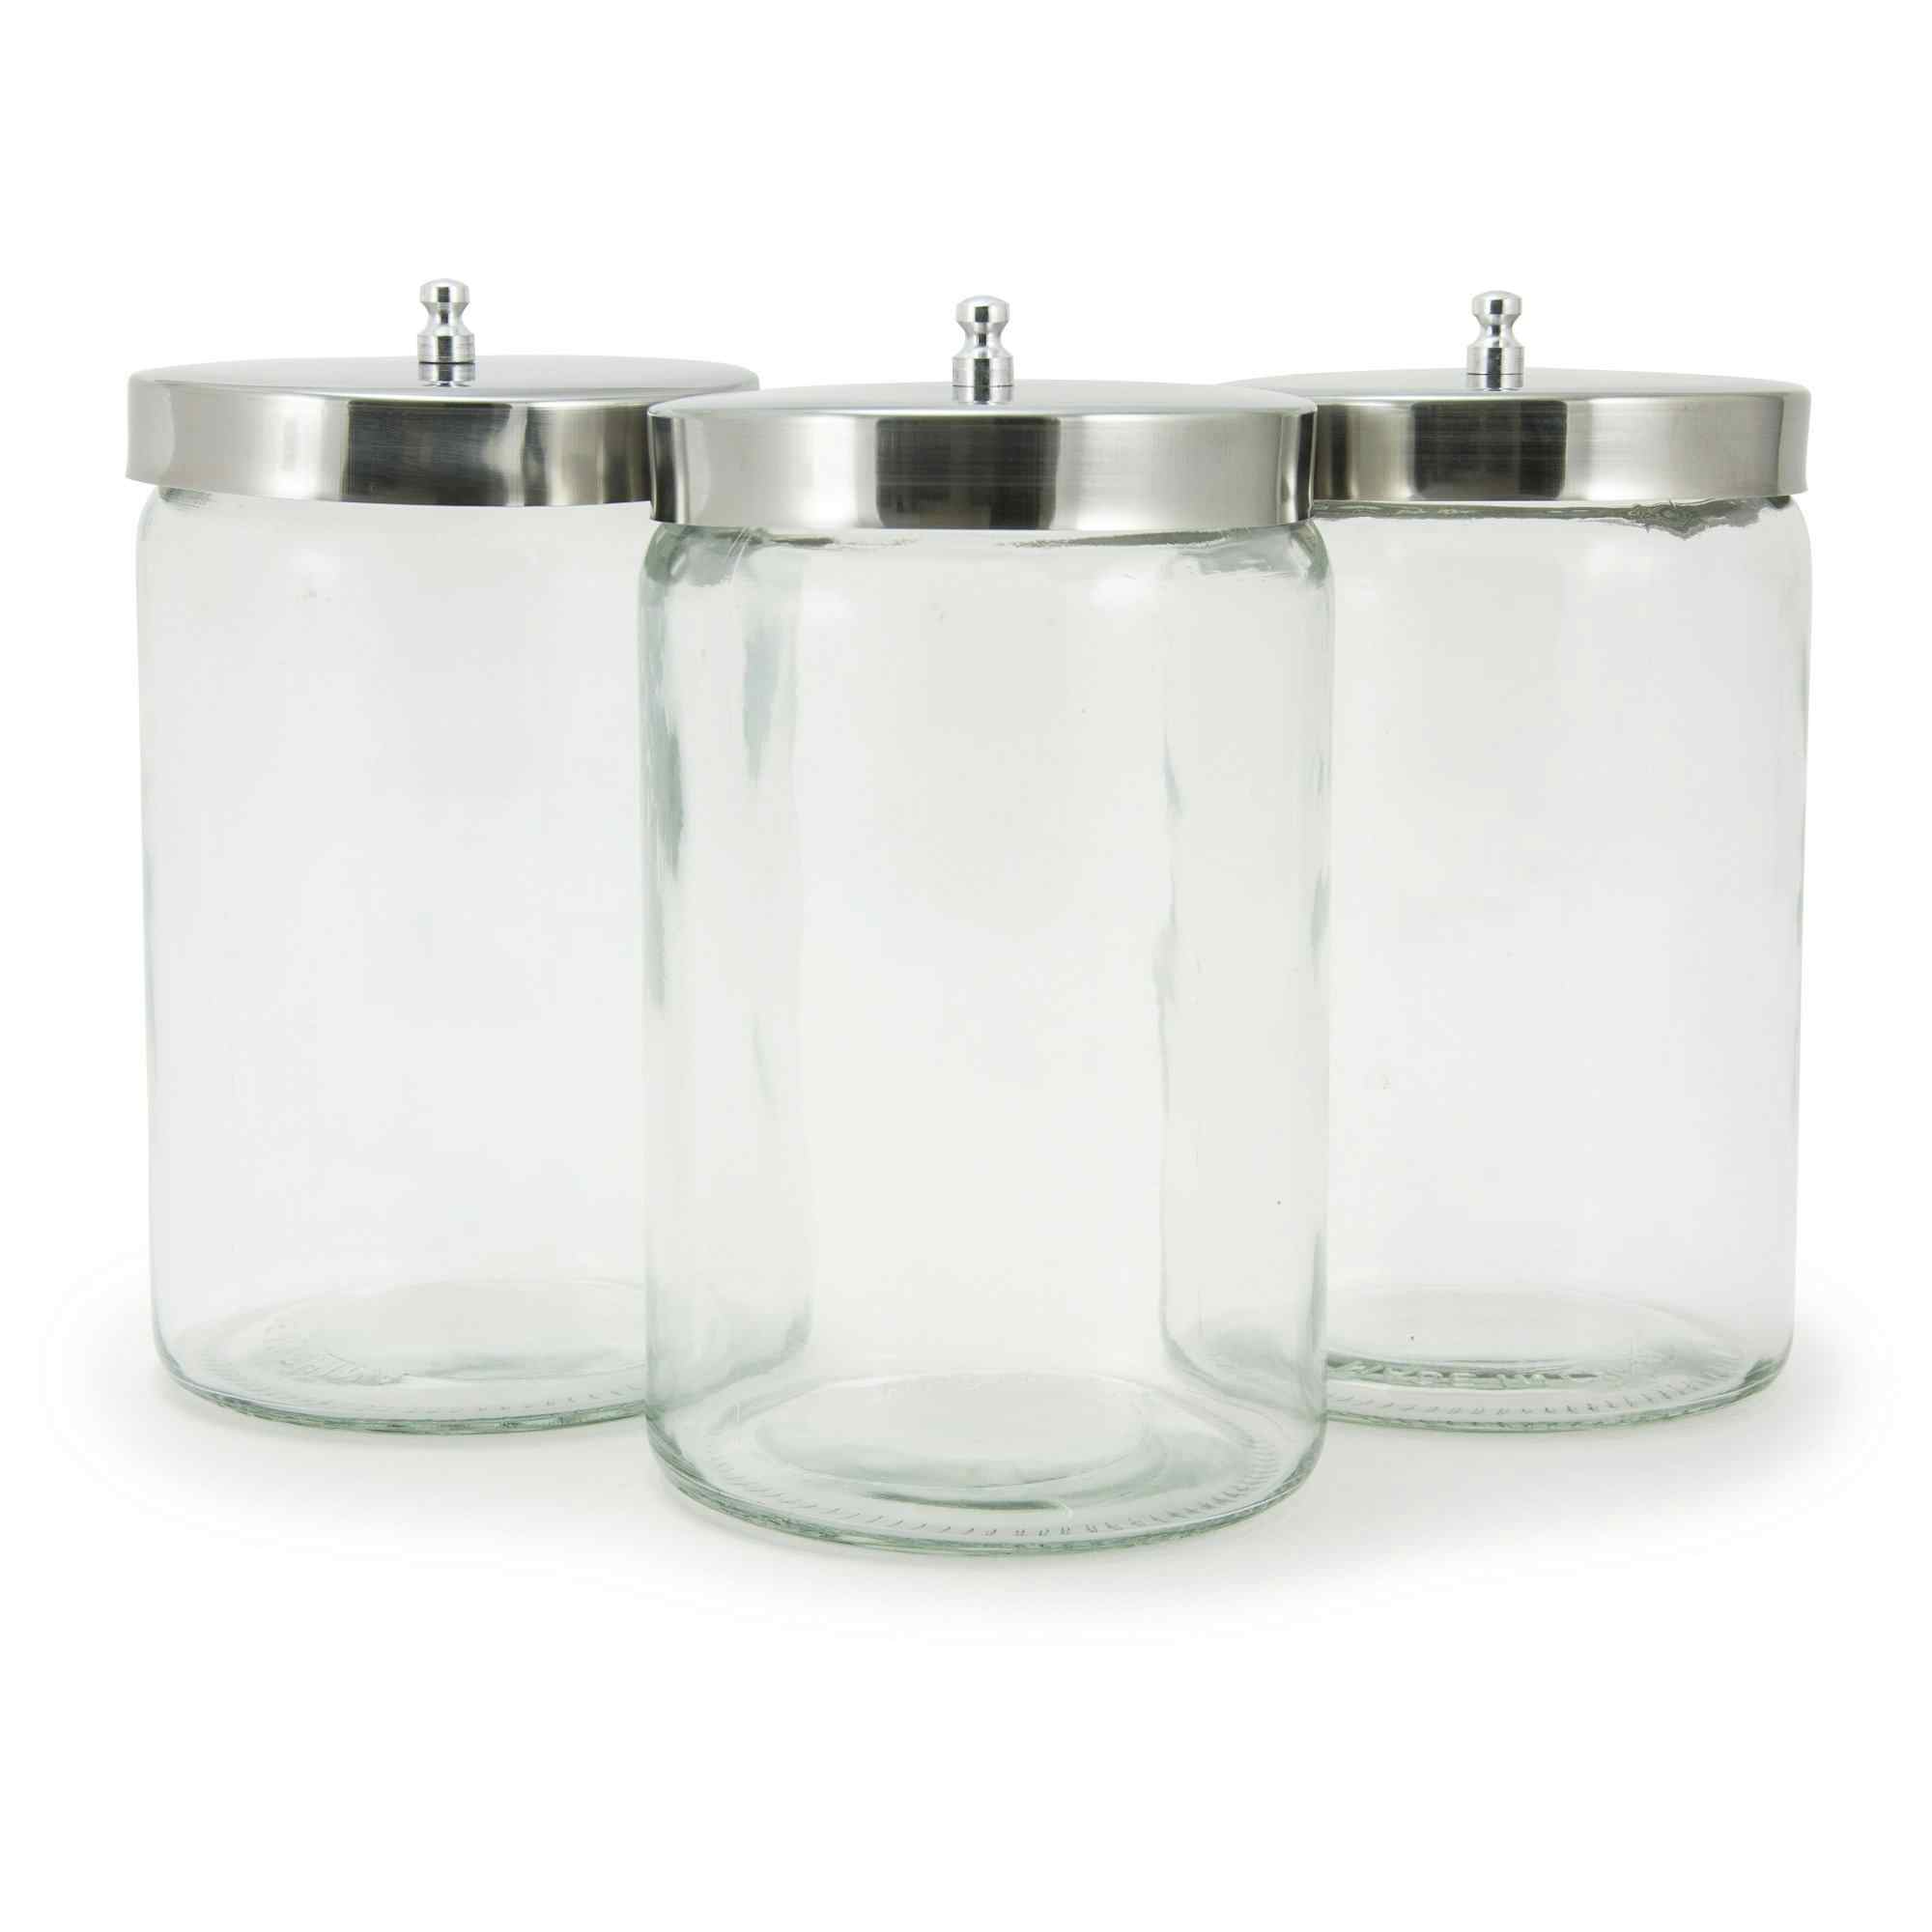 McKesson Sundry Glass Jar, 63-4012, 1 Each